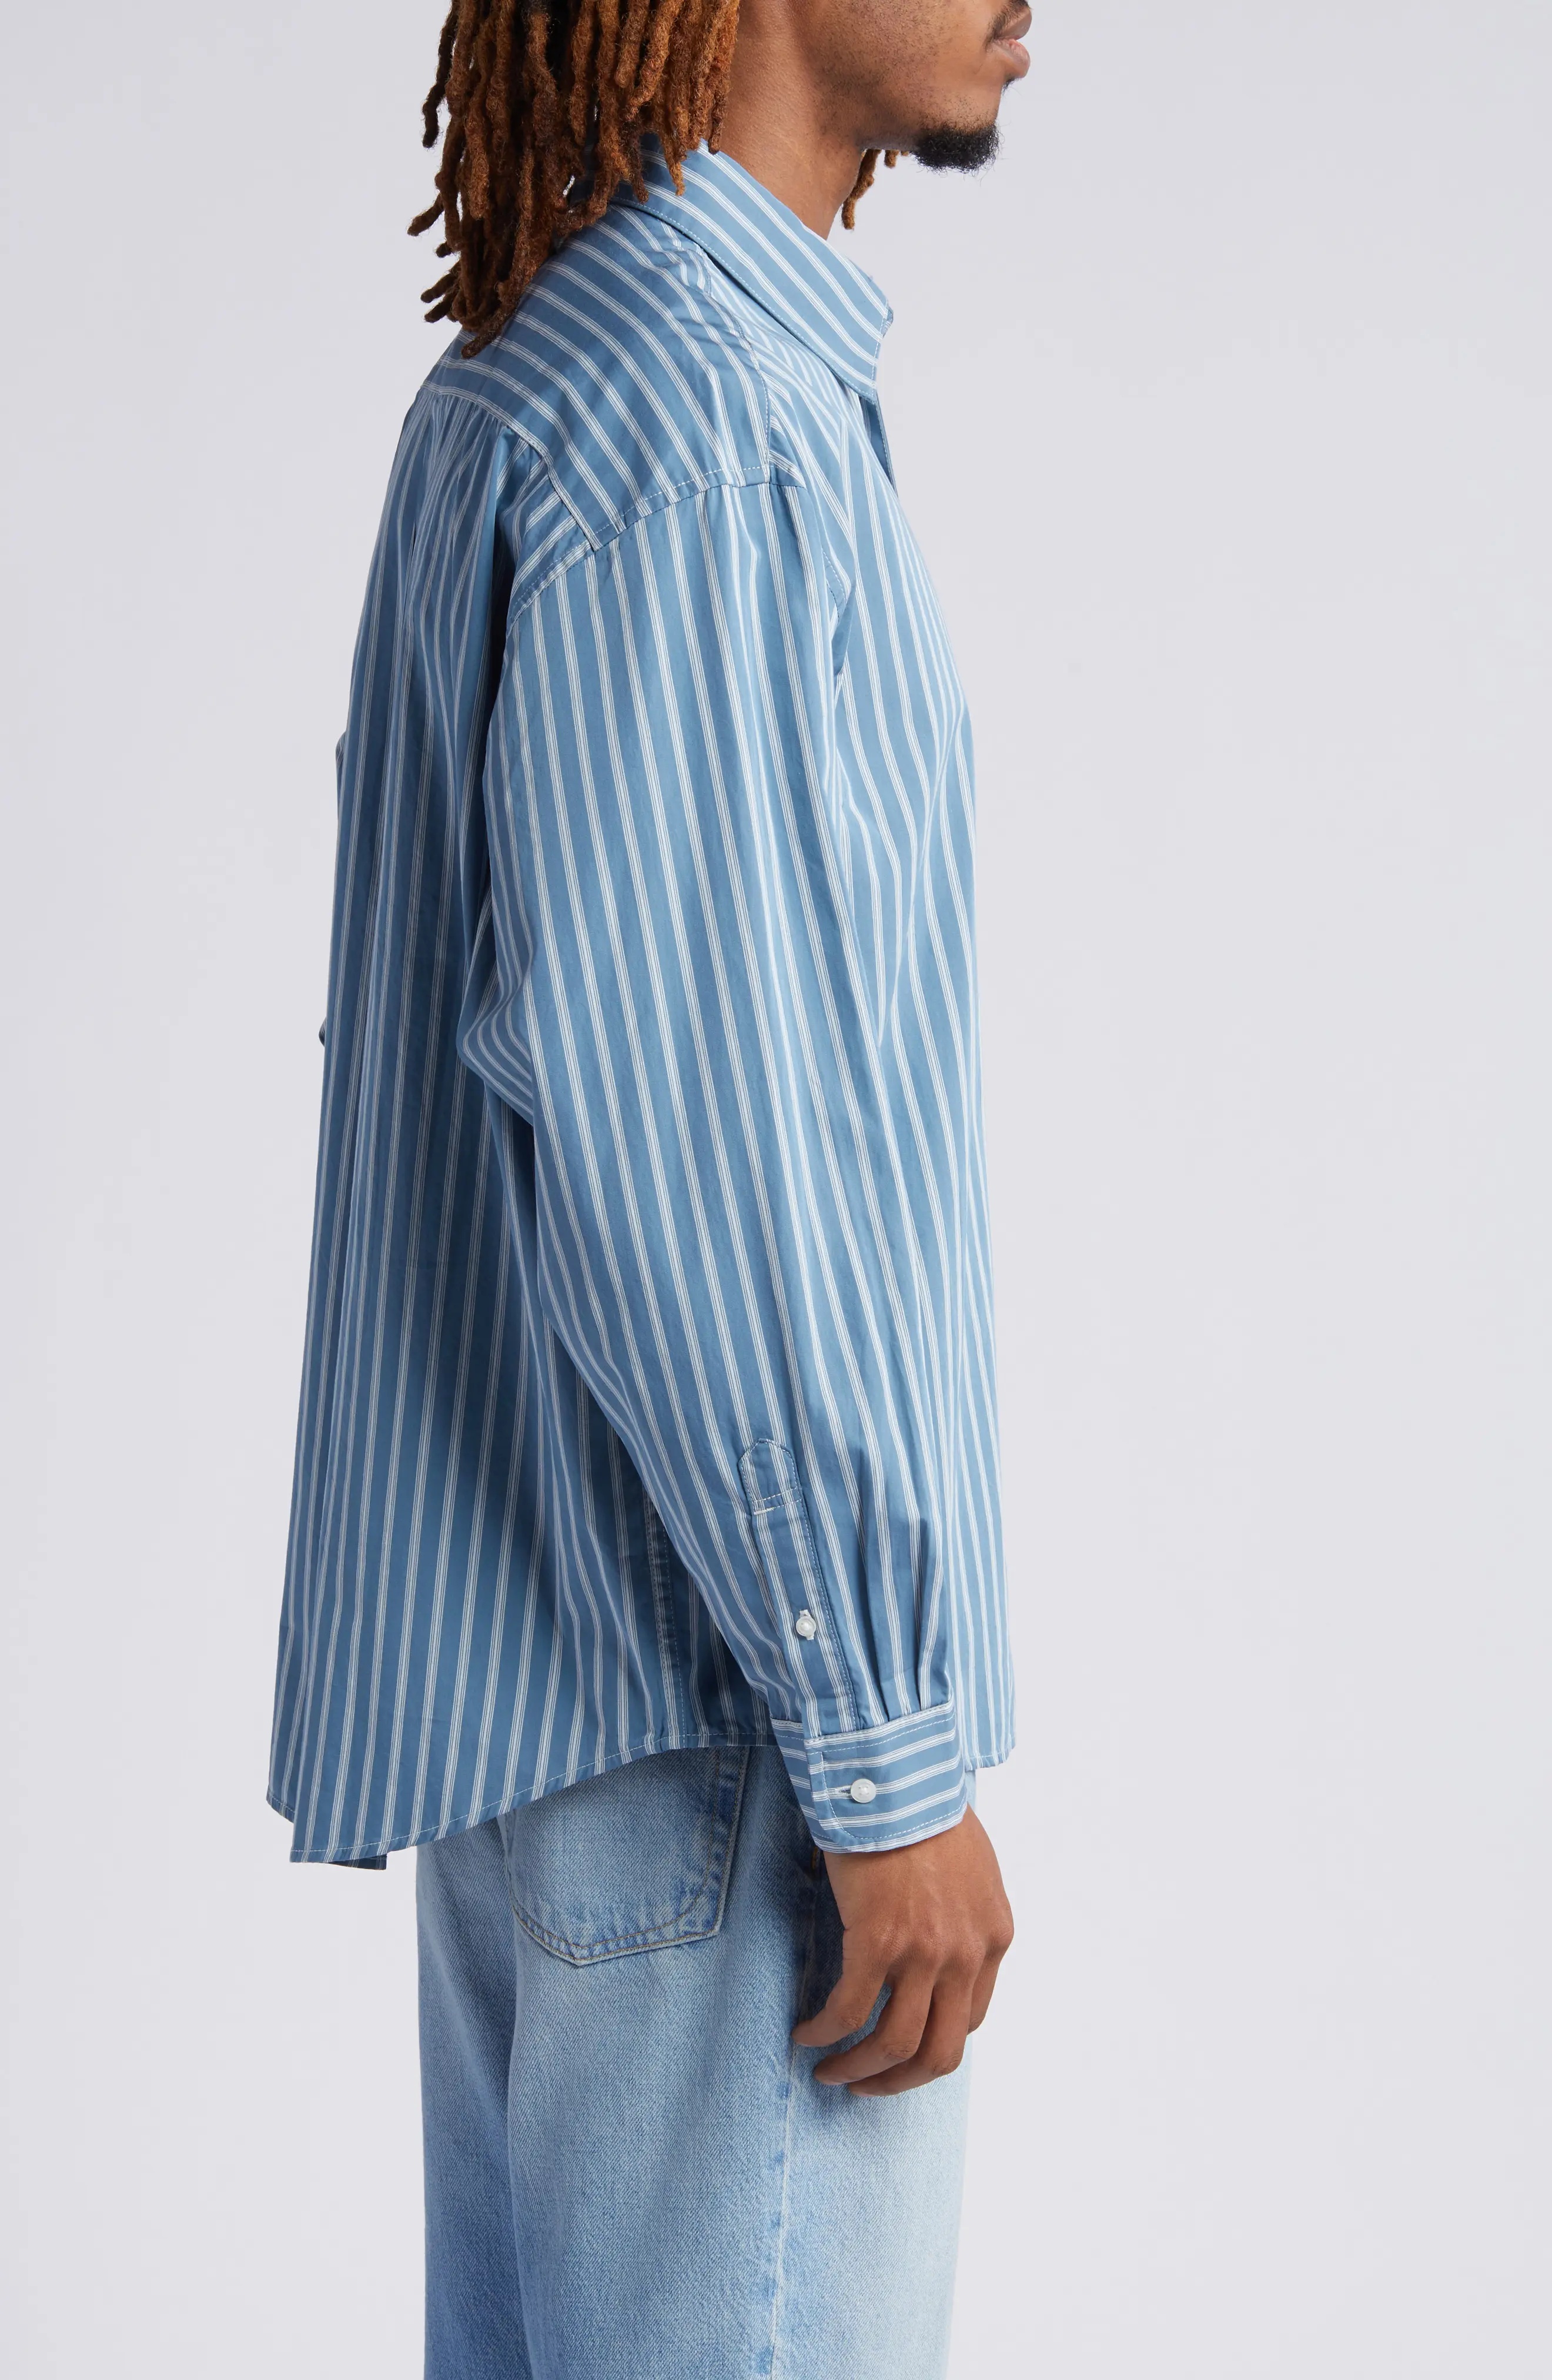 Ligety Stripe Button-Up Shirt in Ligety Stripe Blue/Wax - 4